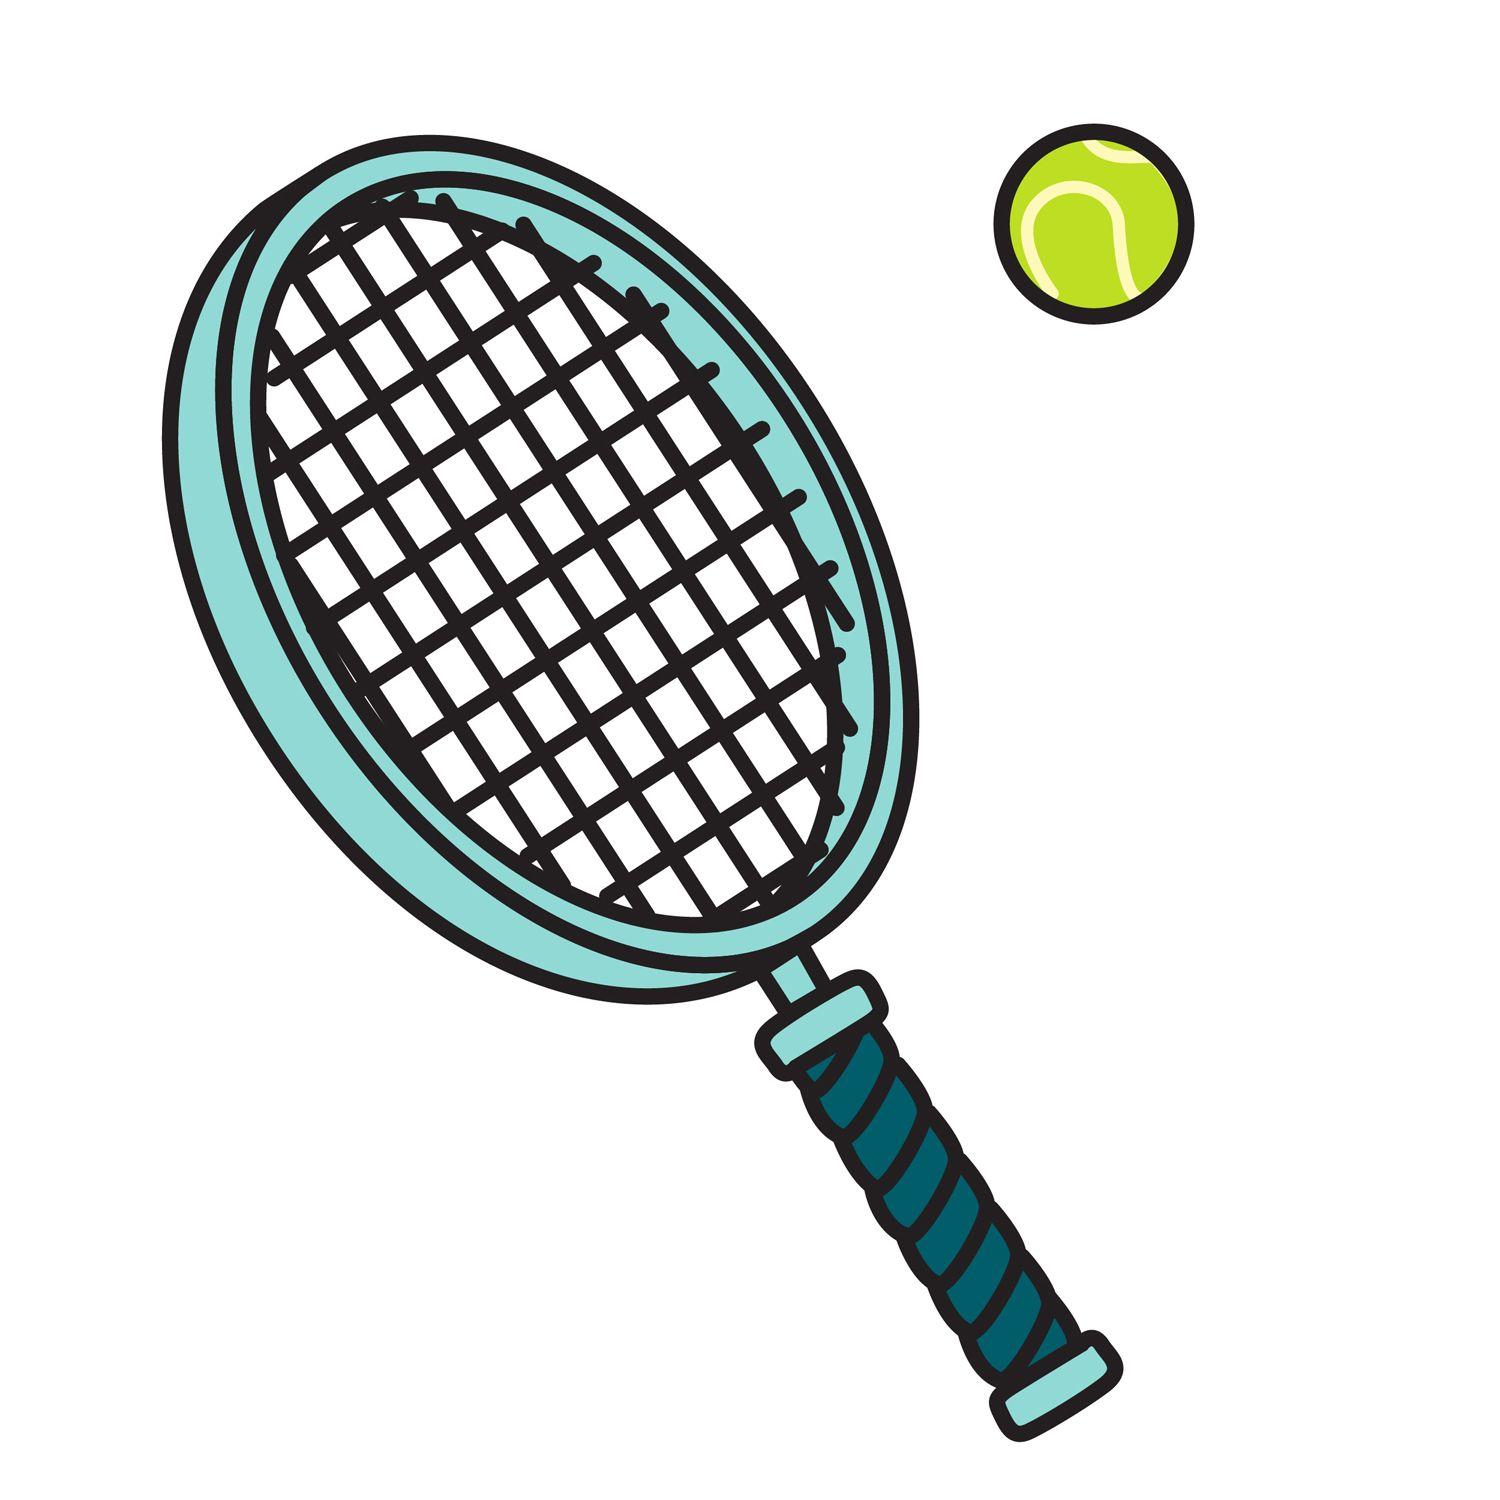 Blue and Green Tennis Racket Logo - Tennis Racket & Ball — Simple vector illustration of a light blue ...